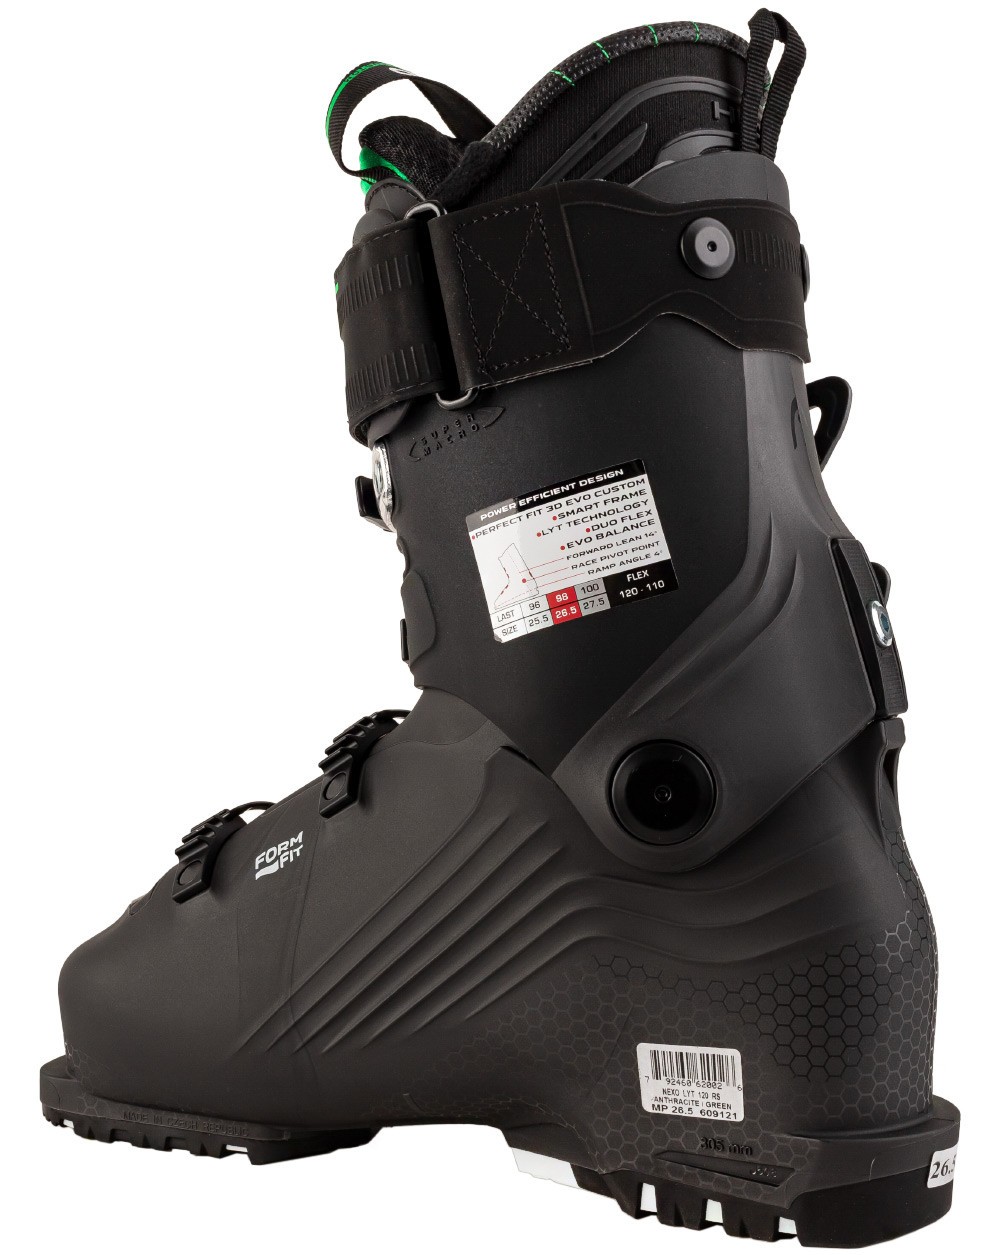 Head Nexo Lyt 120 RS Ski Boots